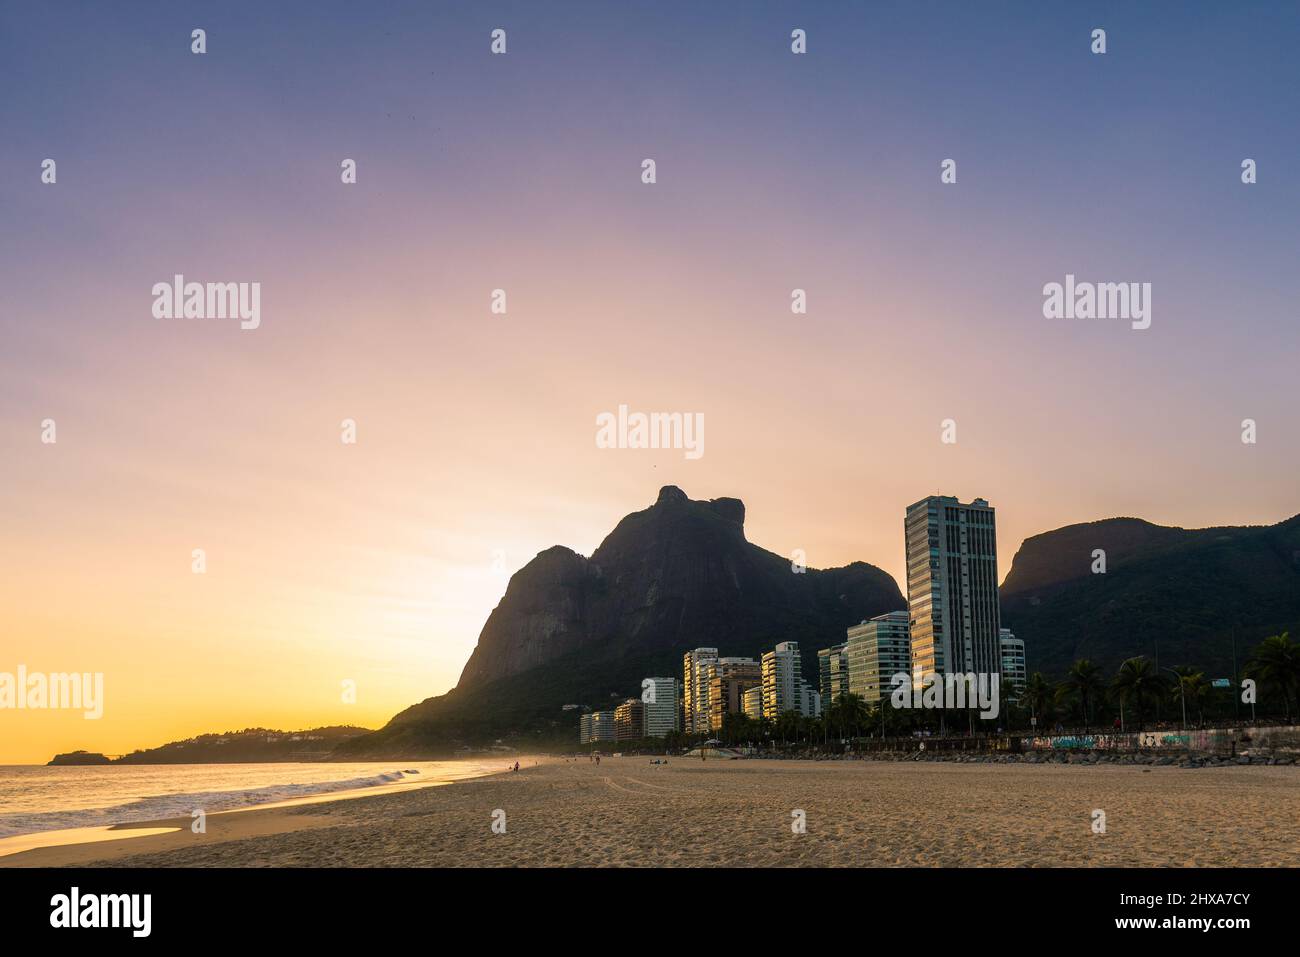 Warm Sunset at Empty Sao Conrado Beach in Rio de Janeiro With Luxury Apartment Buildings and Pedra da Gavea View Stock Photo